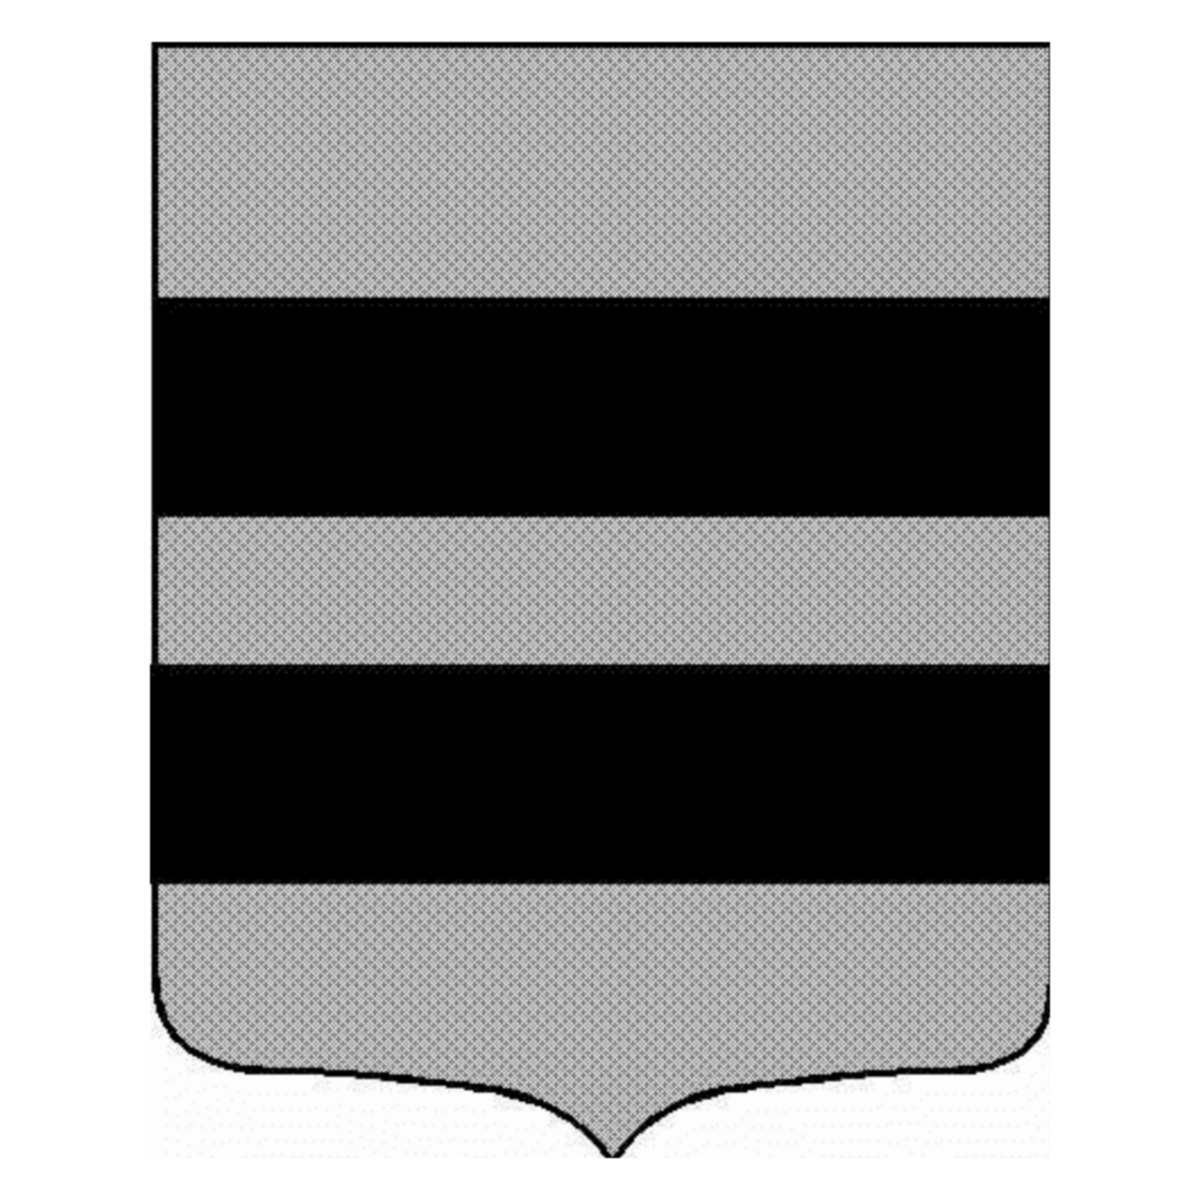 Coat of arms of family Garo